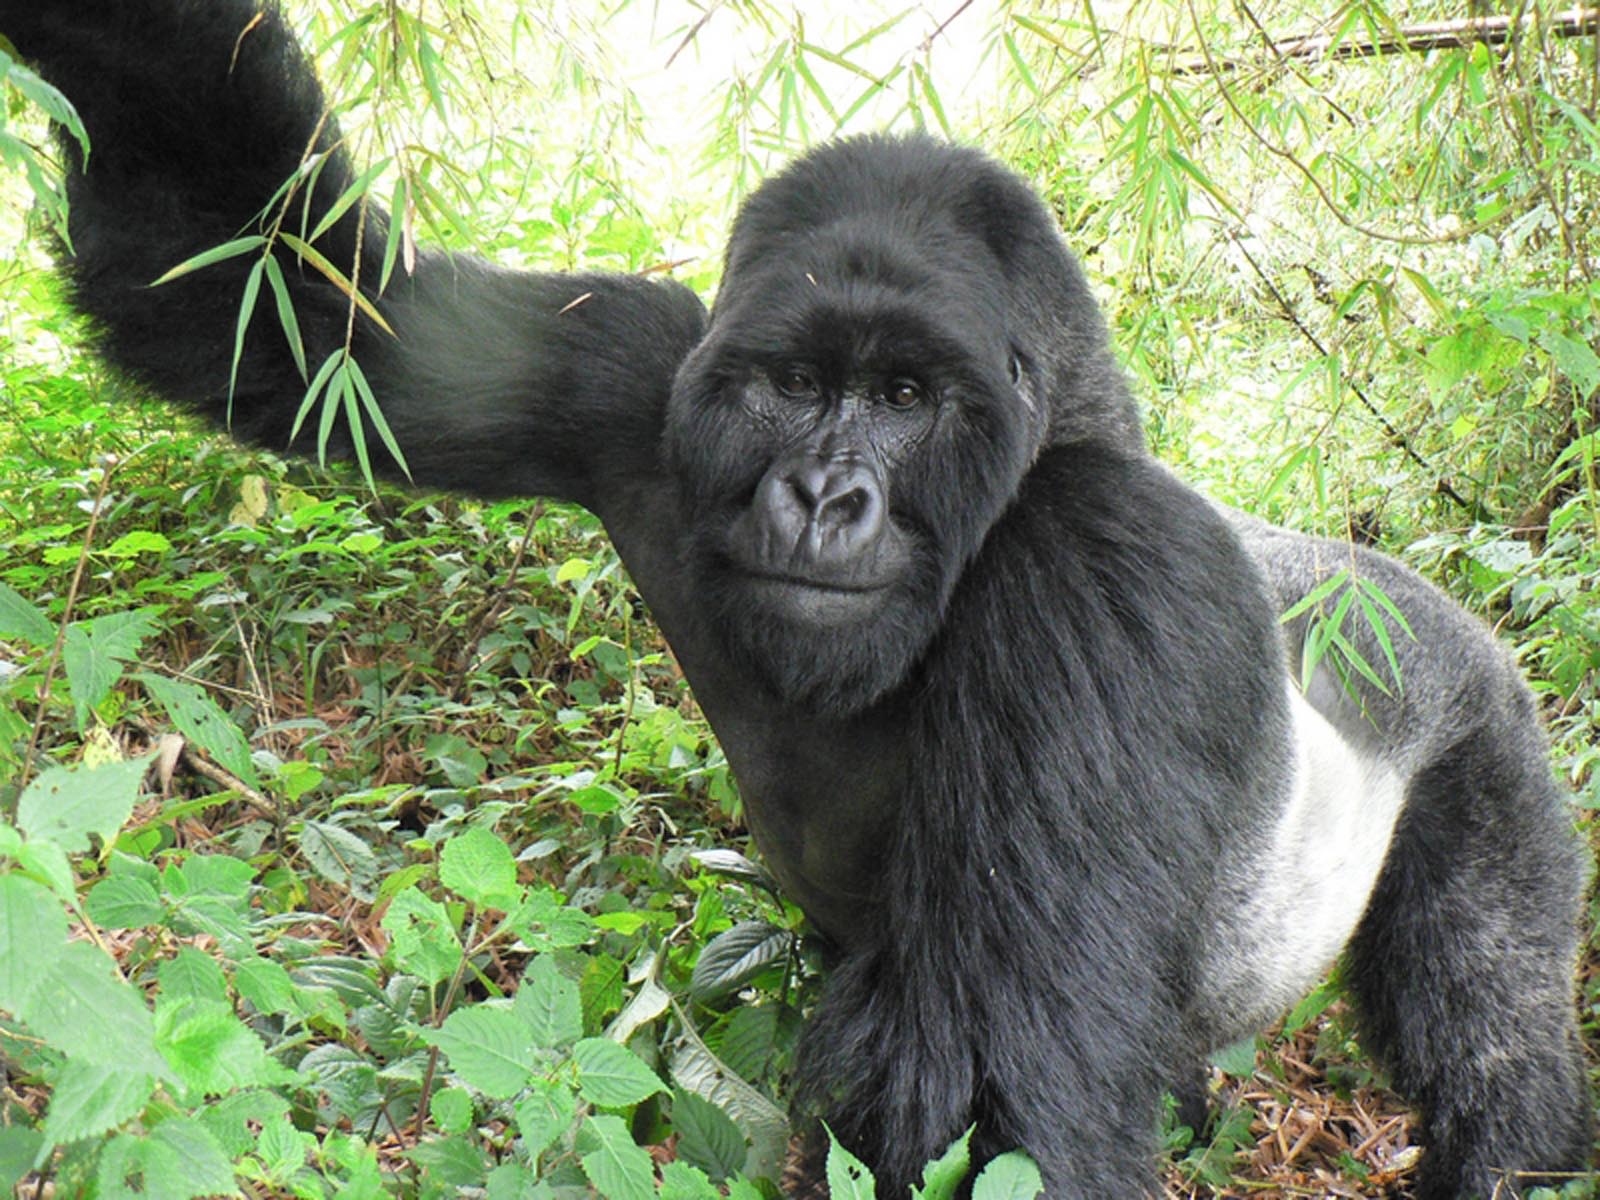 A silverback mountain gorilla in its natural habitat